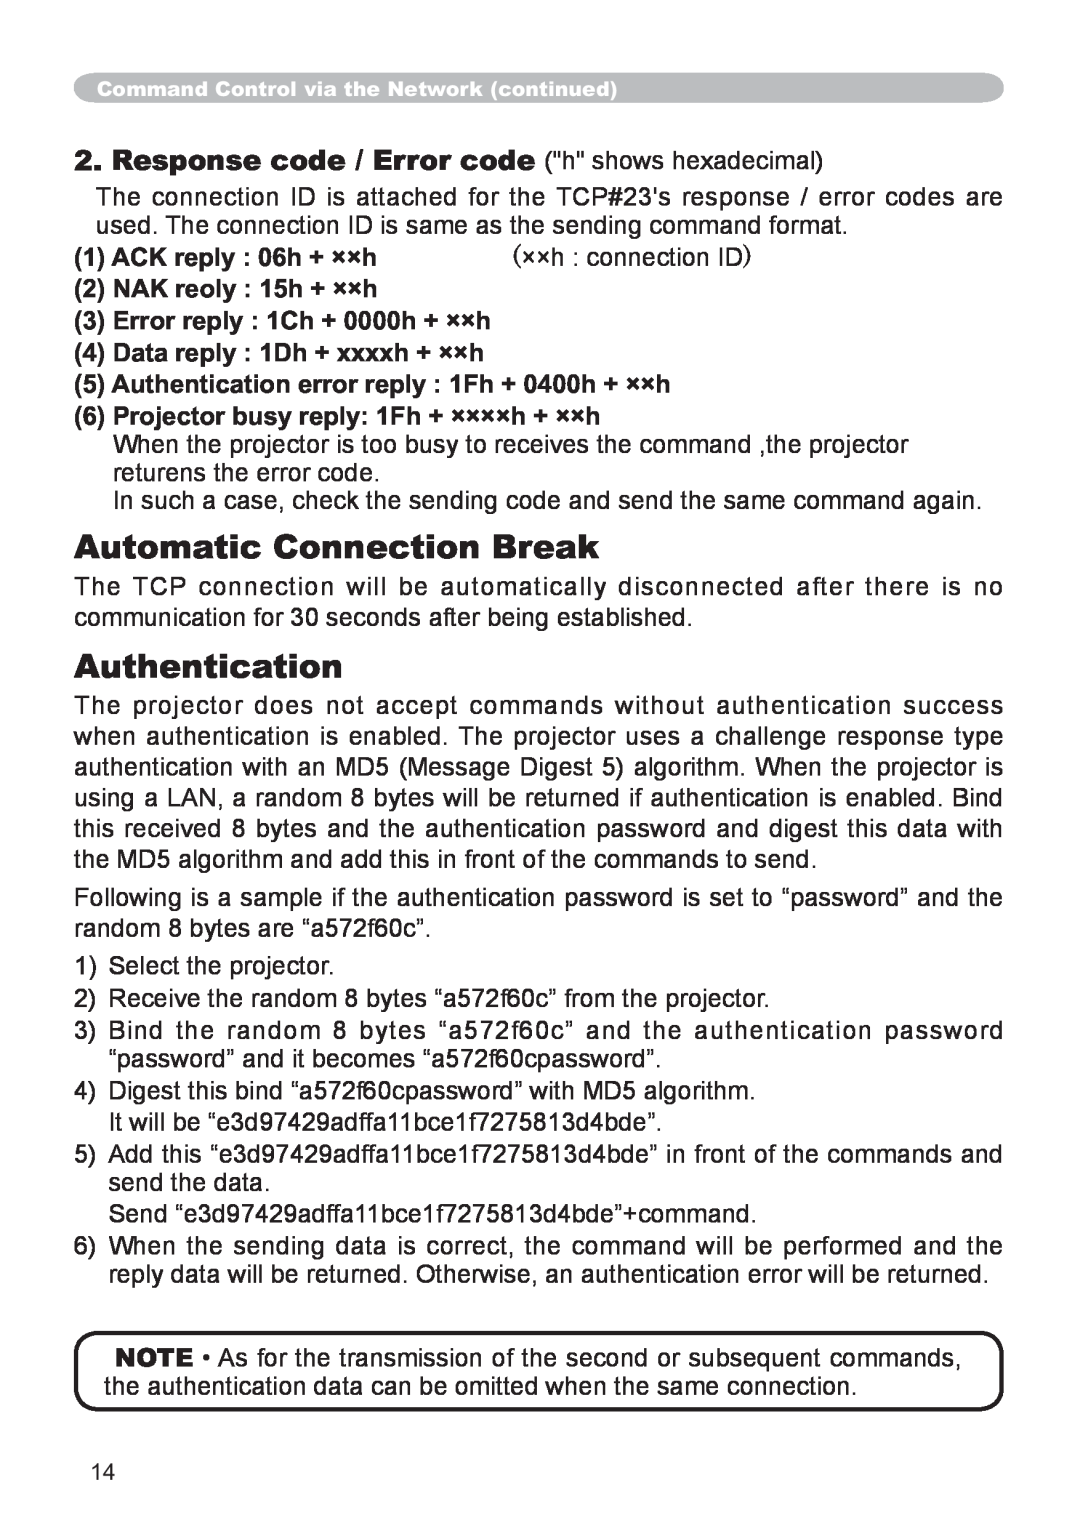 Hitachi CP-X3021WN, CP-X2521WN Automatic Connection Break, Authentication, Response code / Error code h shows hexadecimal 